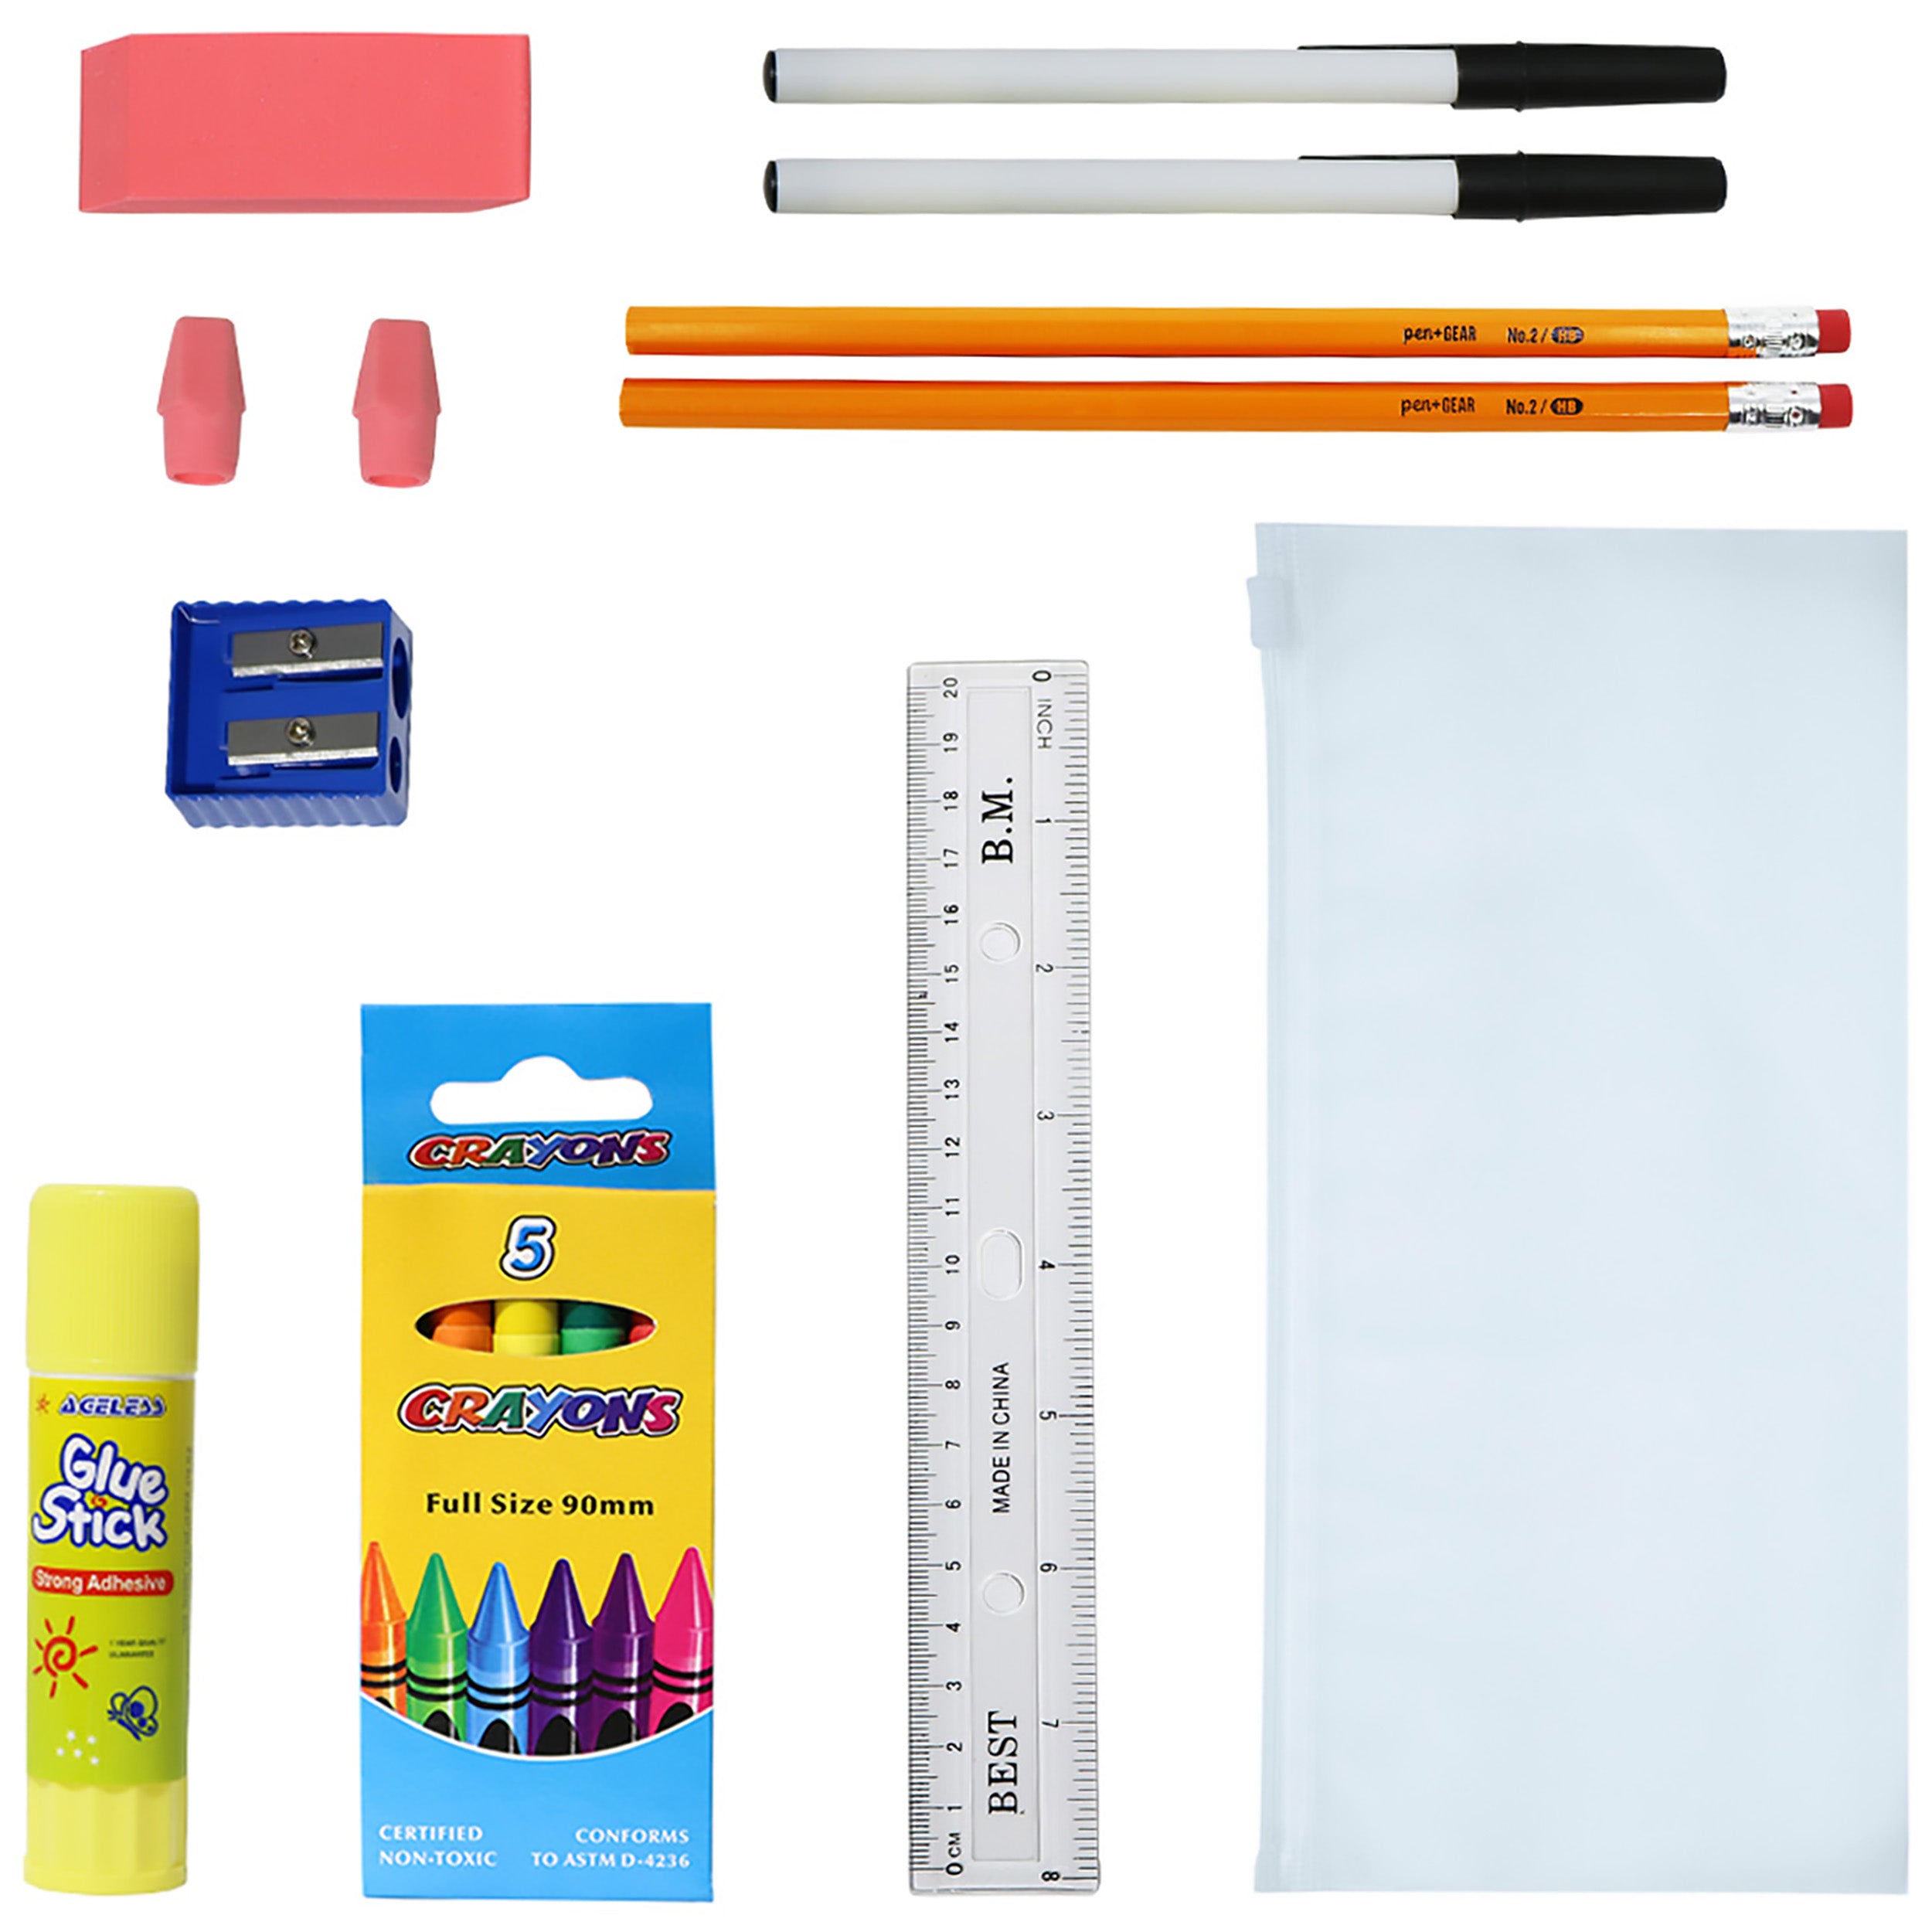 16 Piece Wholesale Kids School Supply Kits - Bulk School Supplies Case of 48